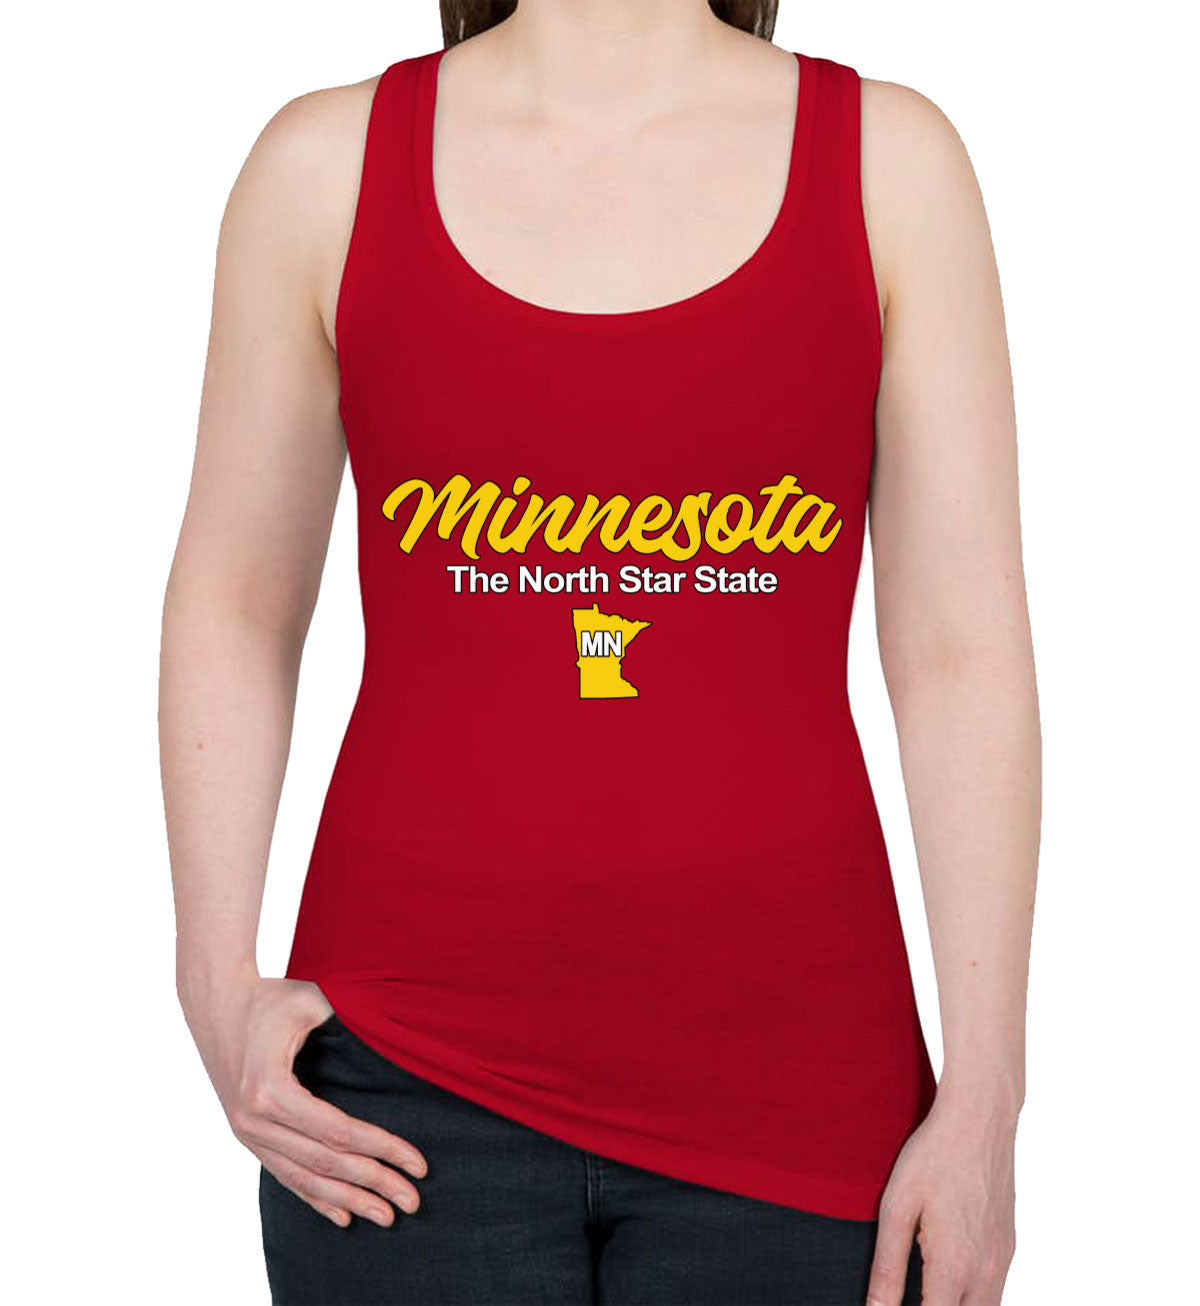 Minnesota The North Star State Women's Racerback Tank Top